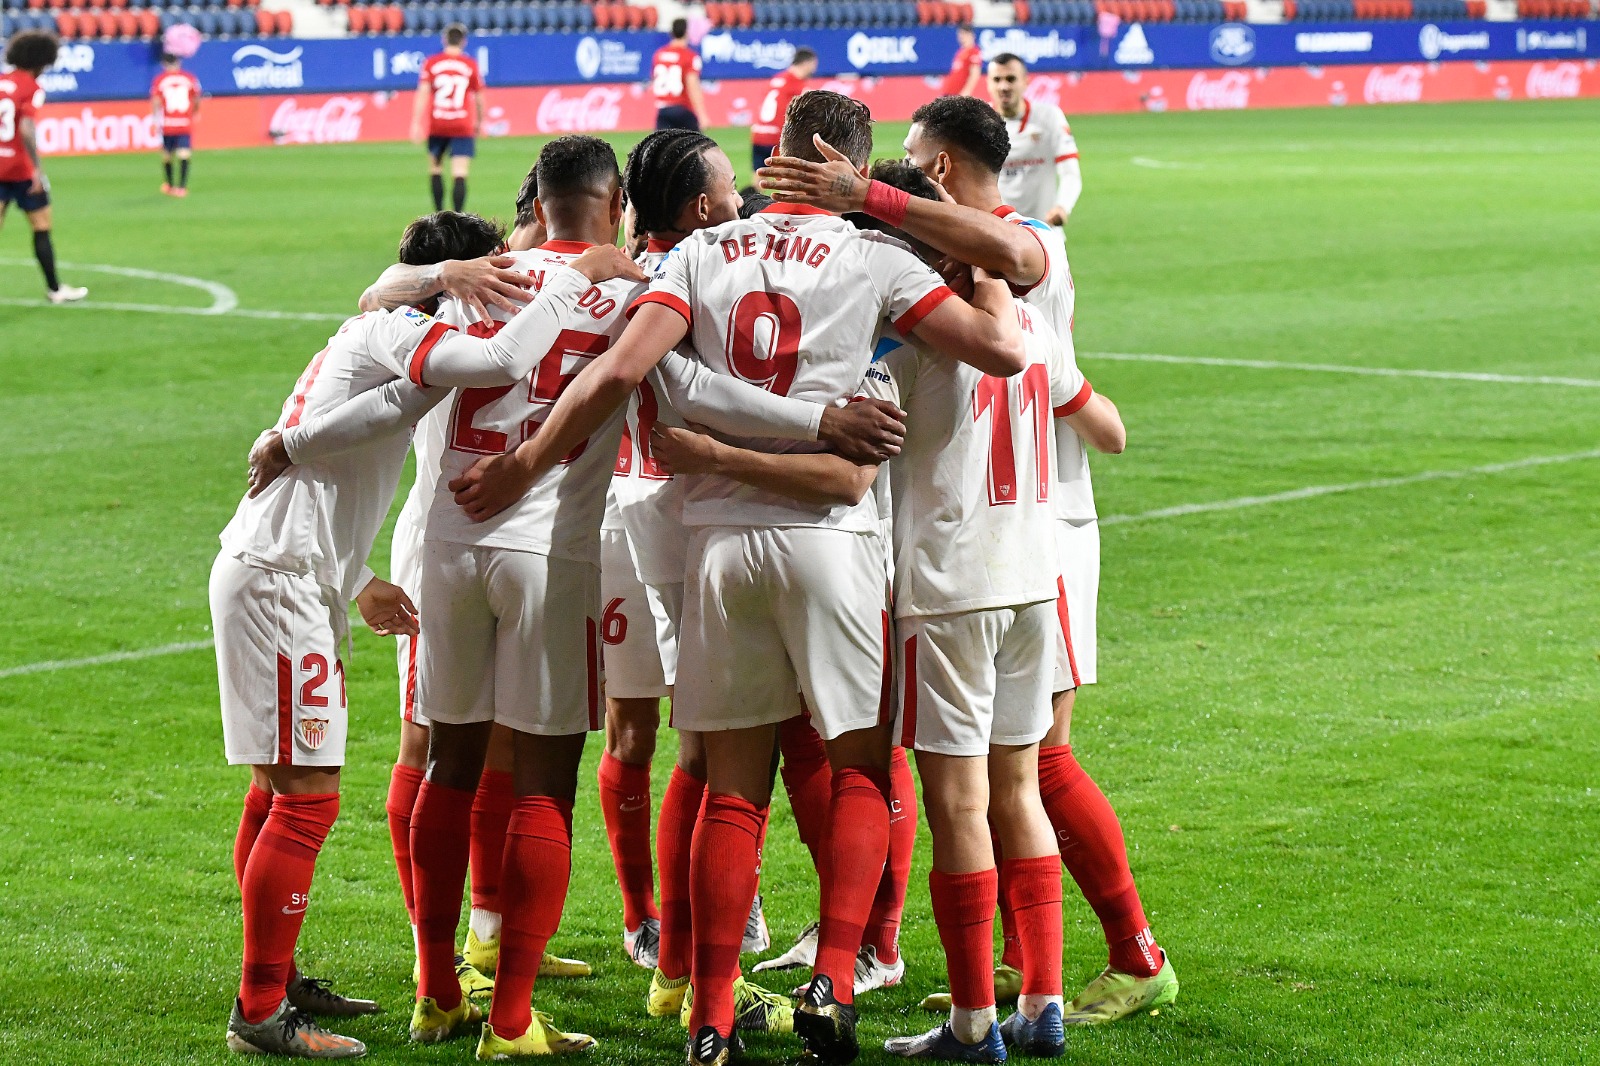 Sevilla FC celebrate a goal against CA Osasuna